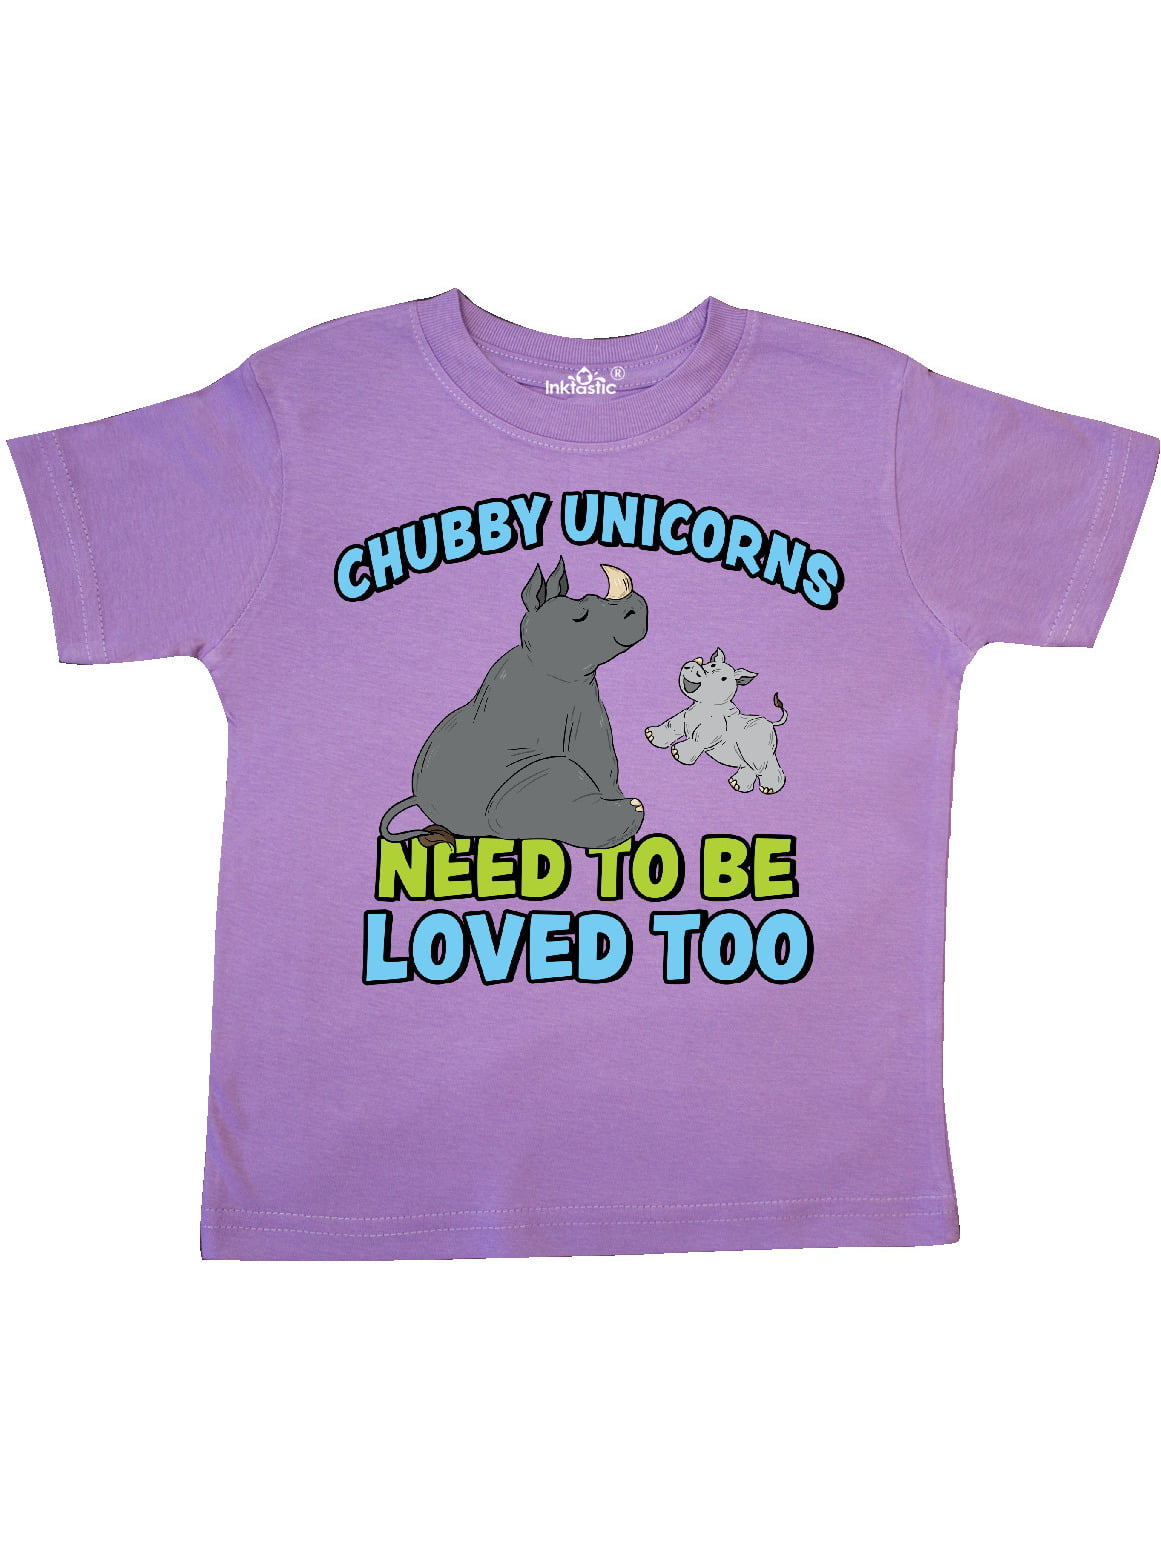 Chubby Unicorn Rhino Funny Fun Printed T Shirt Kids Cute Gift Toddlers Boys 